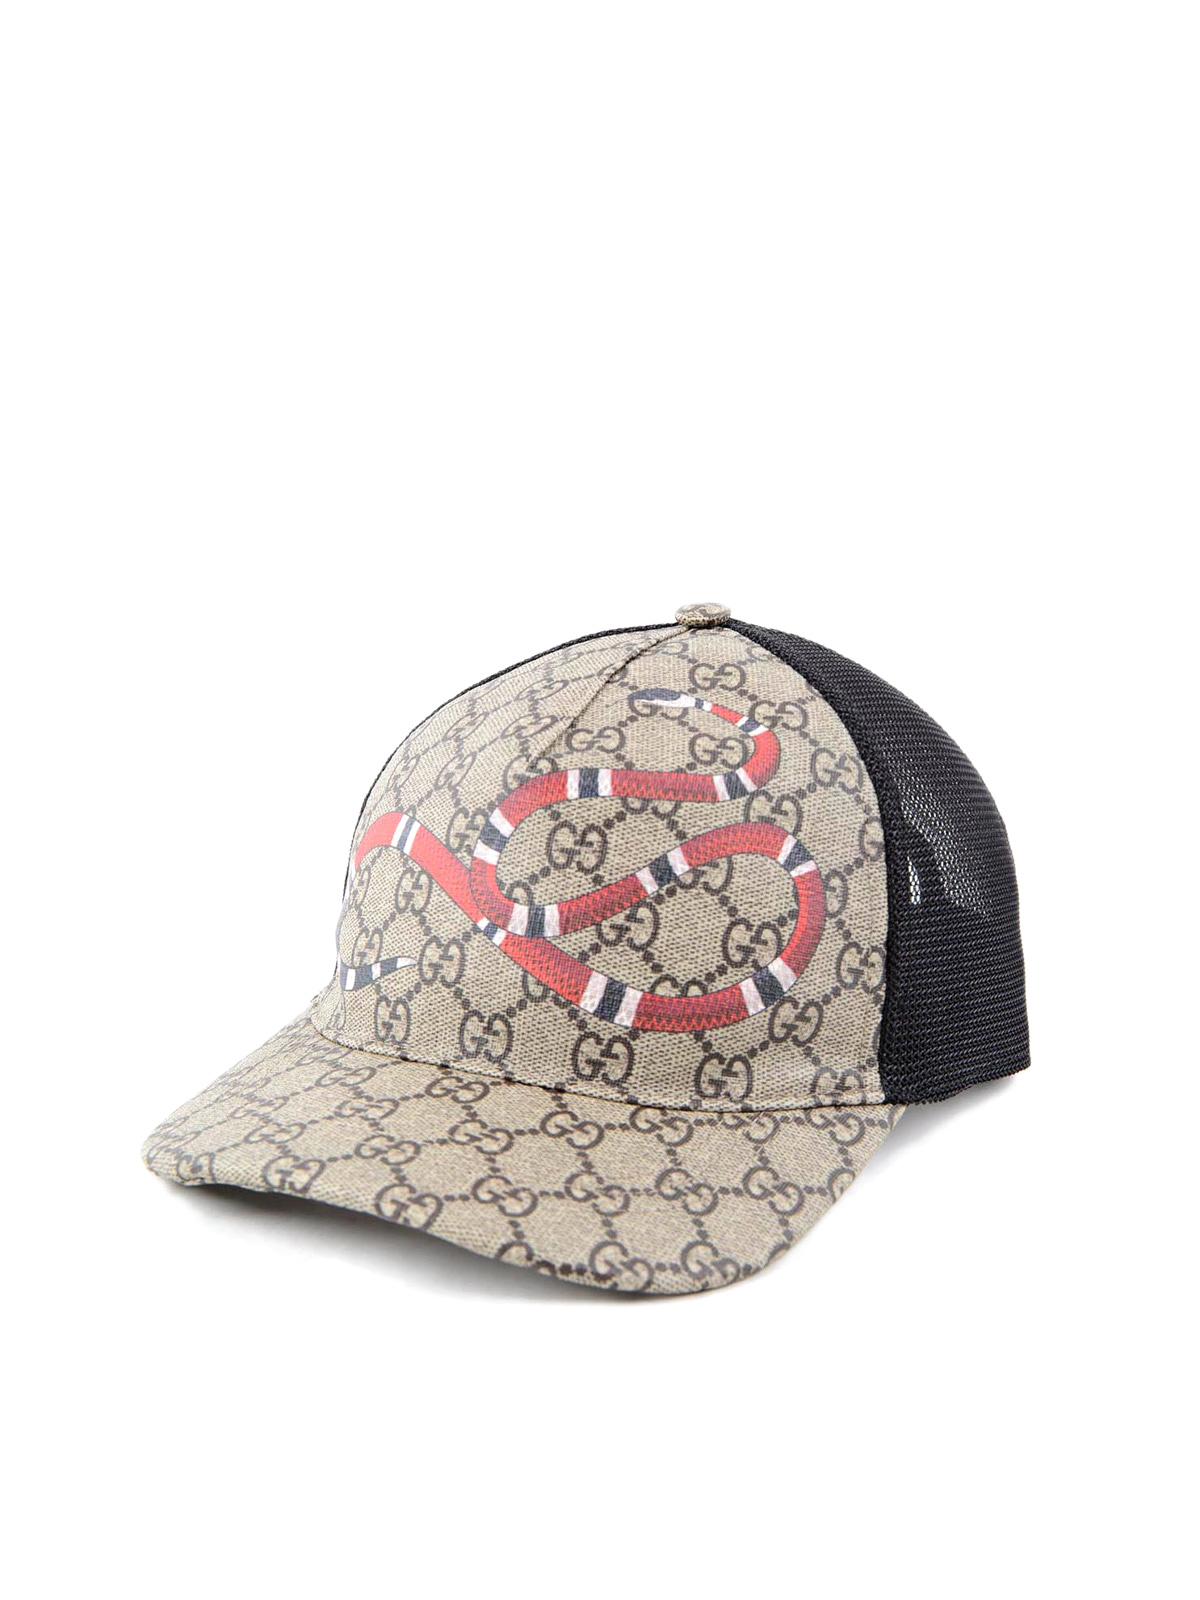 Skeptisk Autonomi Resignation Hats & caps Gucci - Snake GG Supreme baseball hat - 4268874HB102160